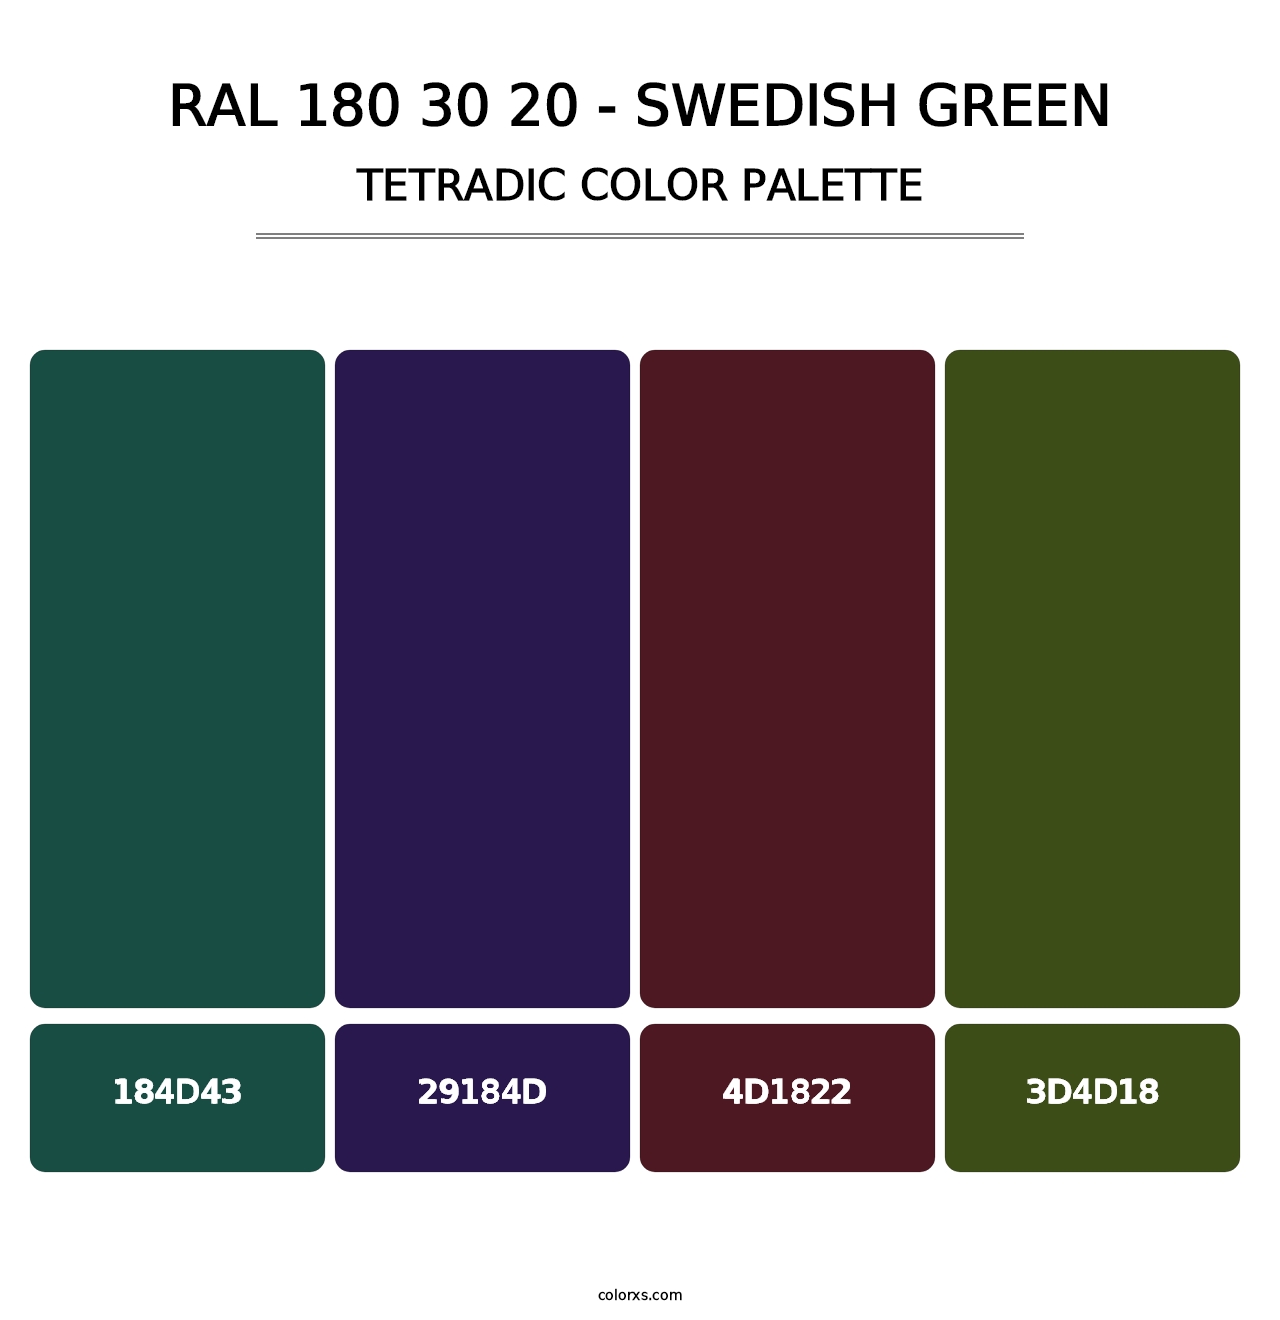 RAL 180 30 20 - Swedish Green - Tetradic Color Palette